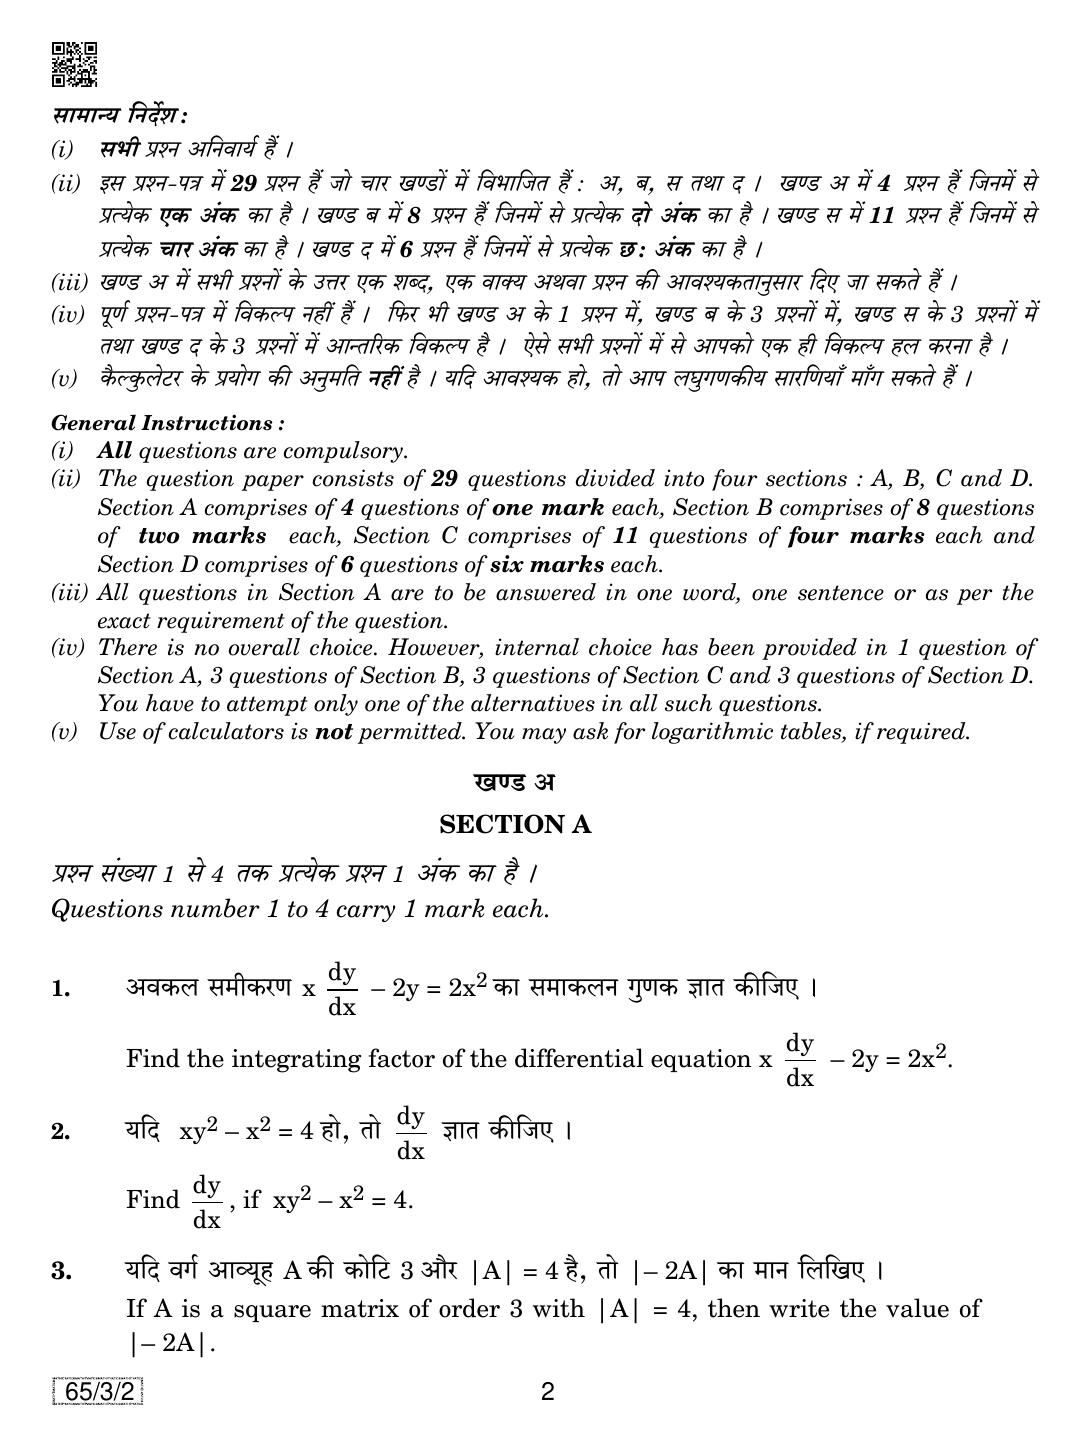 CBSE Class 12 65-3-2 Mathematics 2019 Question Paper - Page 2